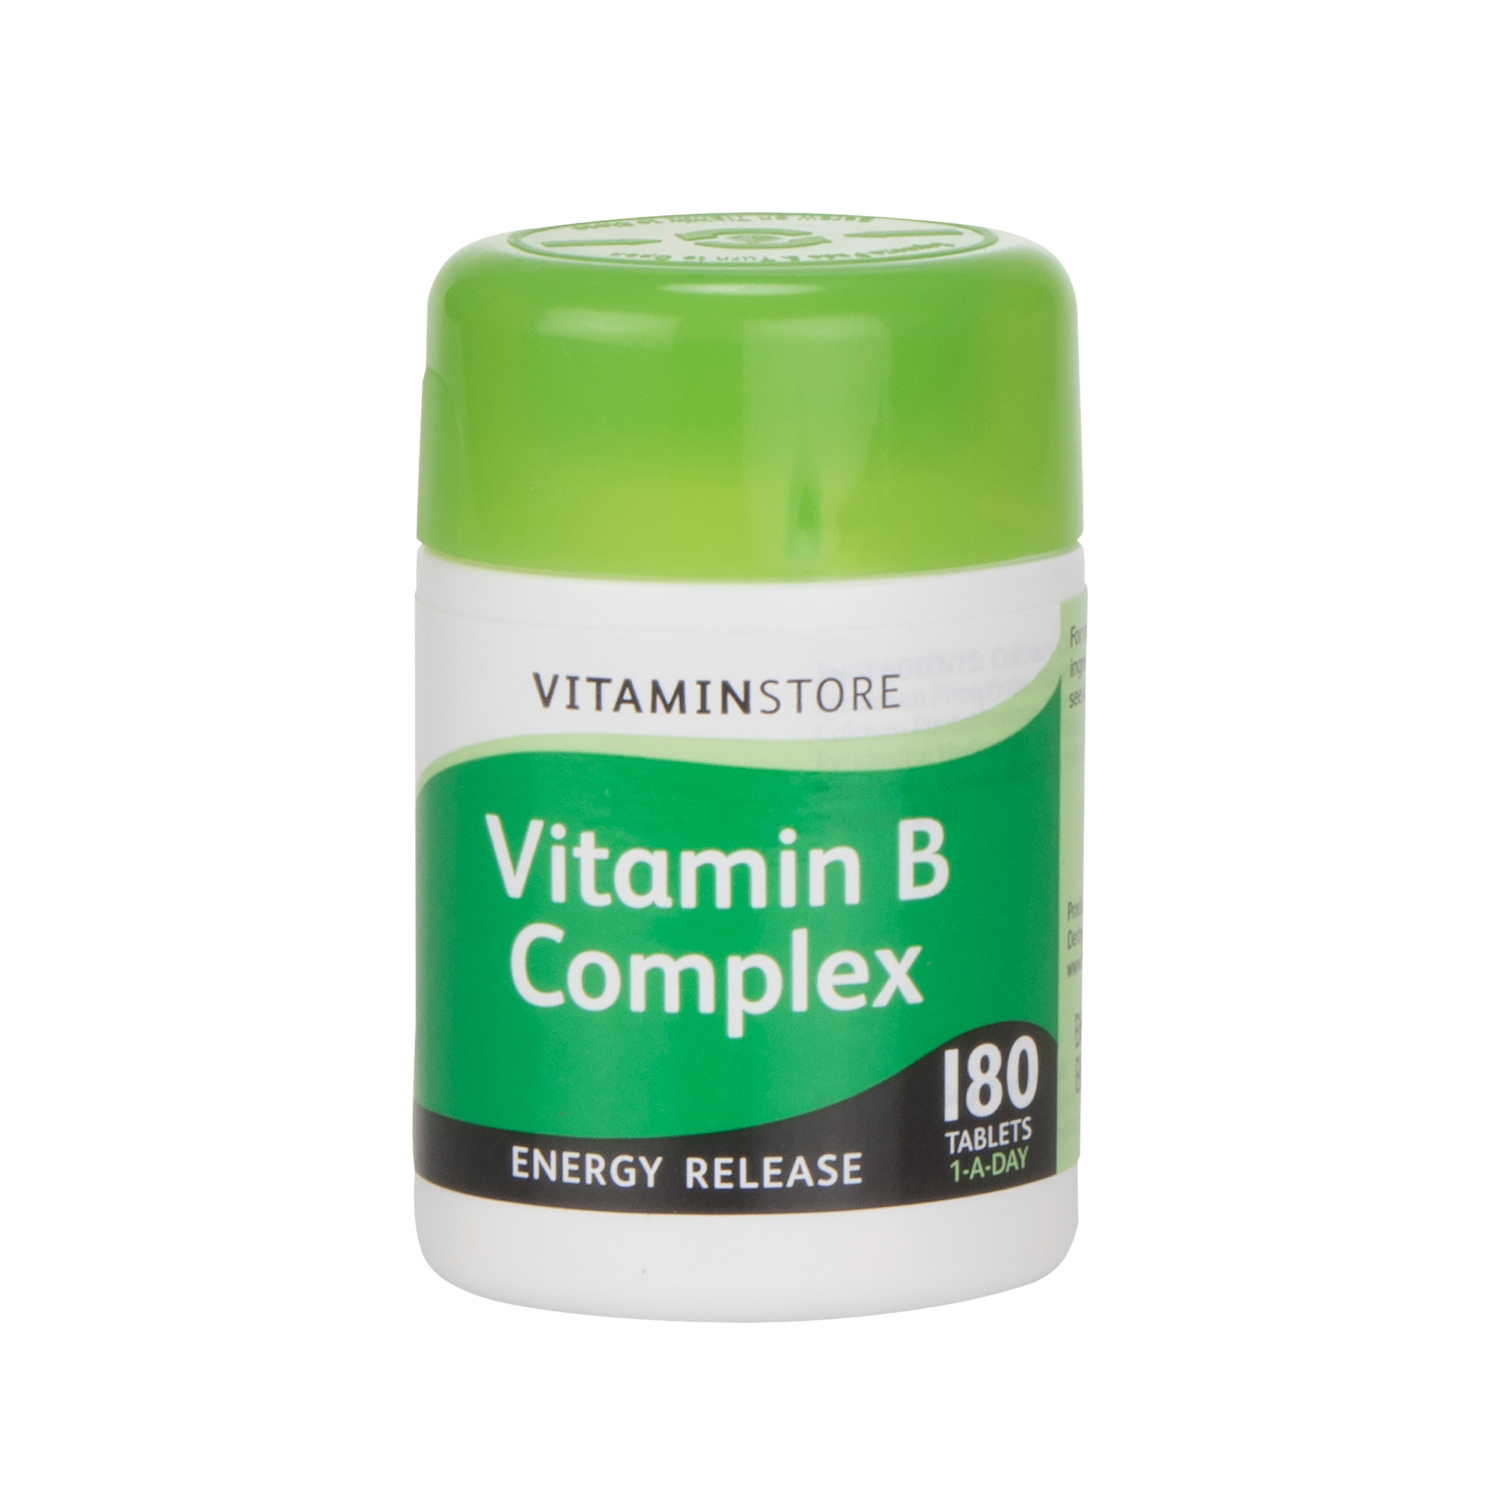 Complex Vitamin B Tablets Image